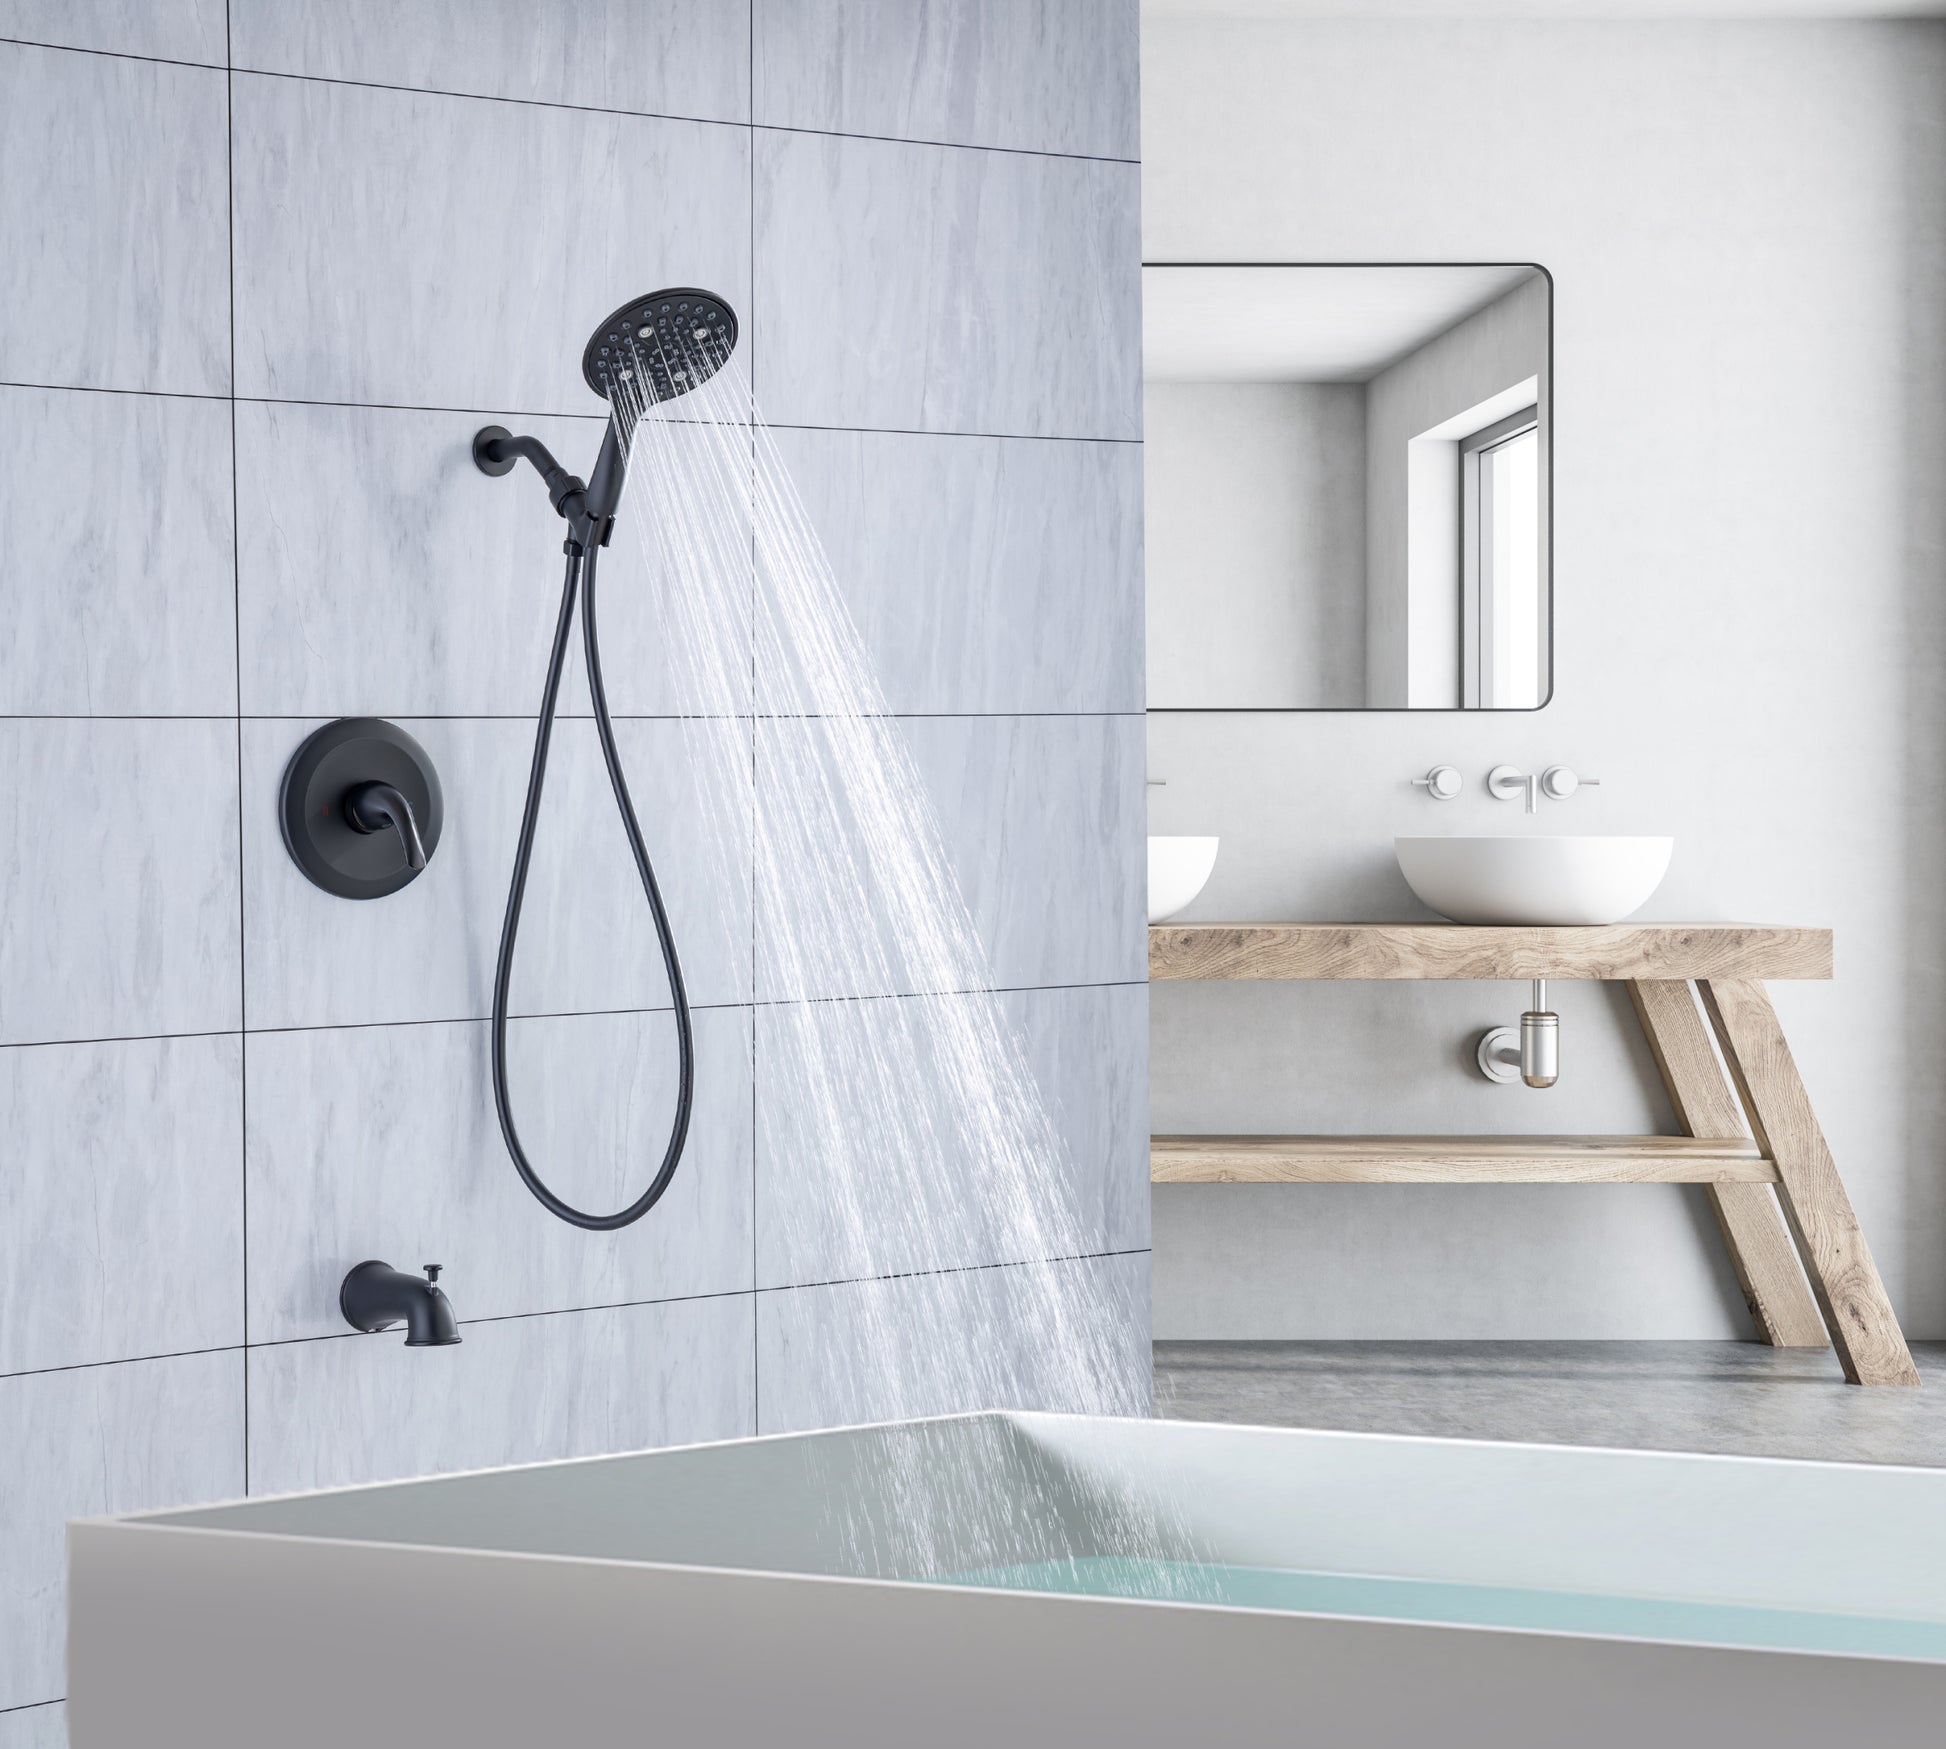 6 In. Detachable Handheld Shower Head Shower Faucet black-brass